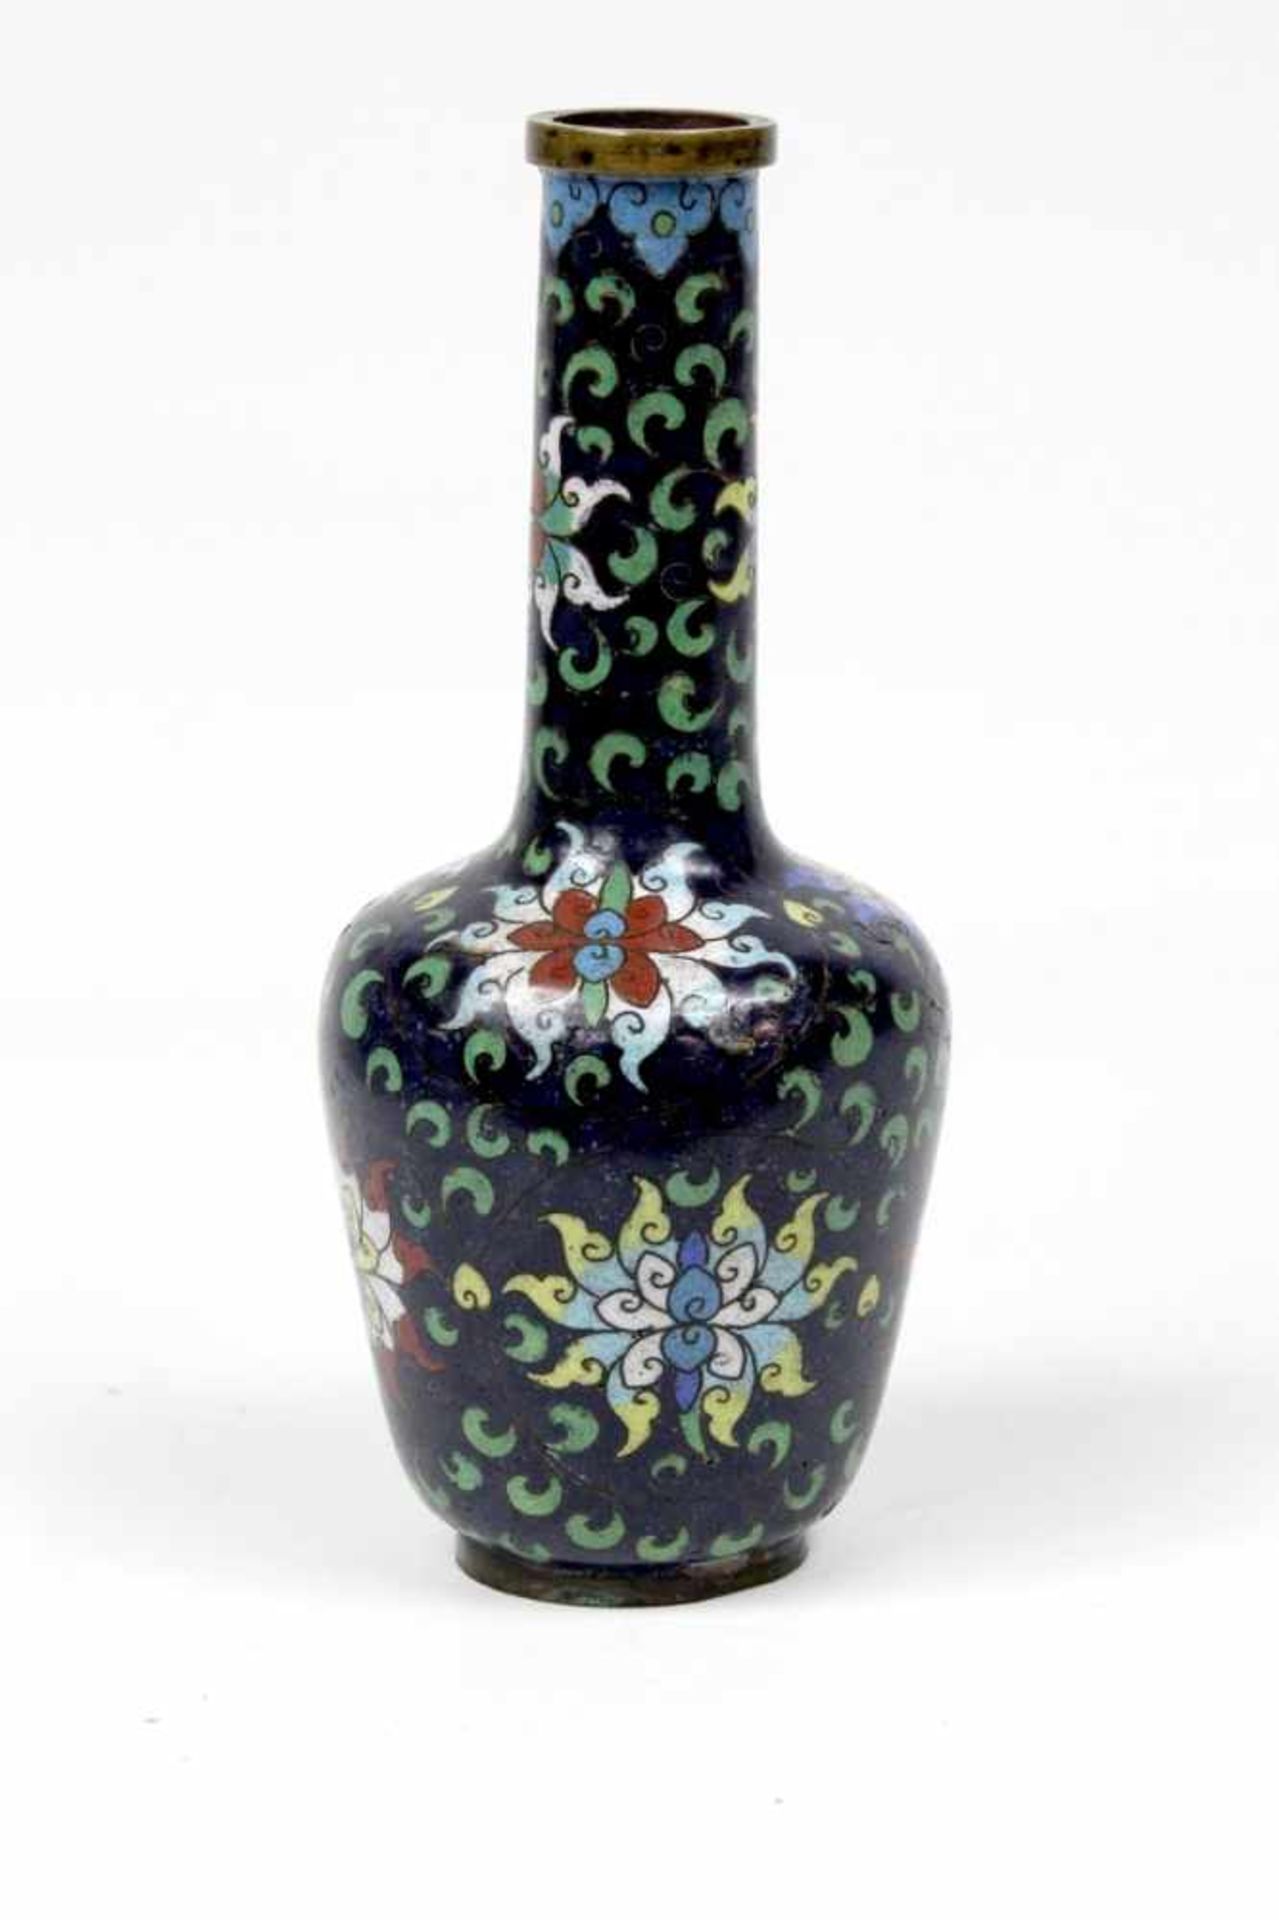 China Blaue Cloisonne-Chrysanthemen Vase frühe Qing Dynastie 17.Jhdt.< - Bild 3 aus 5